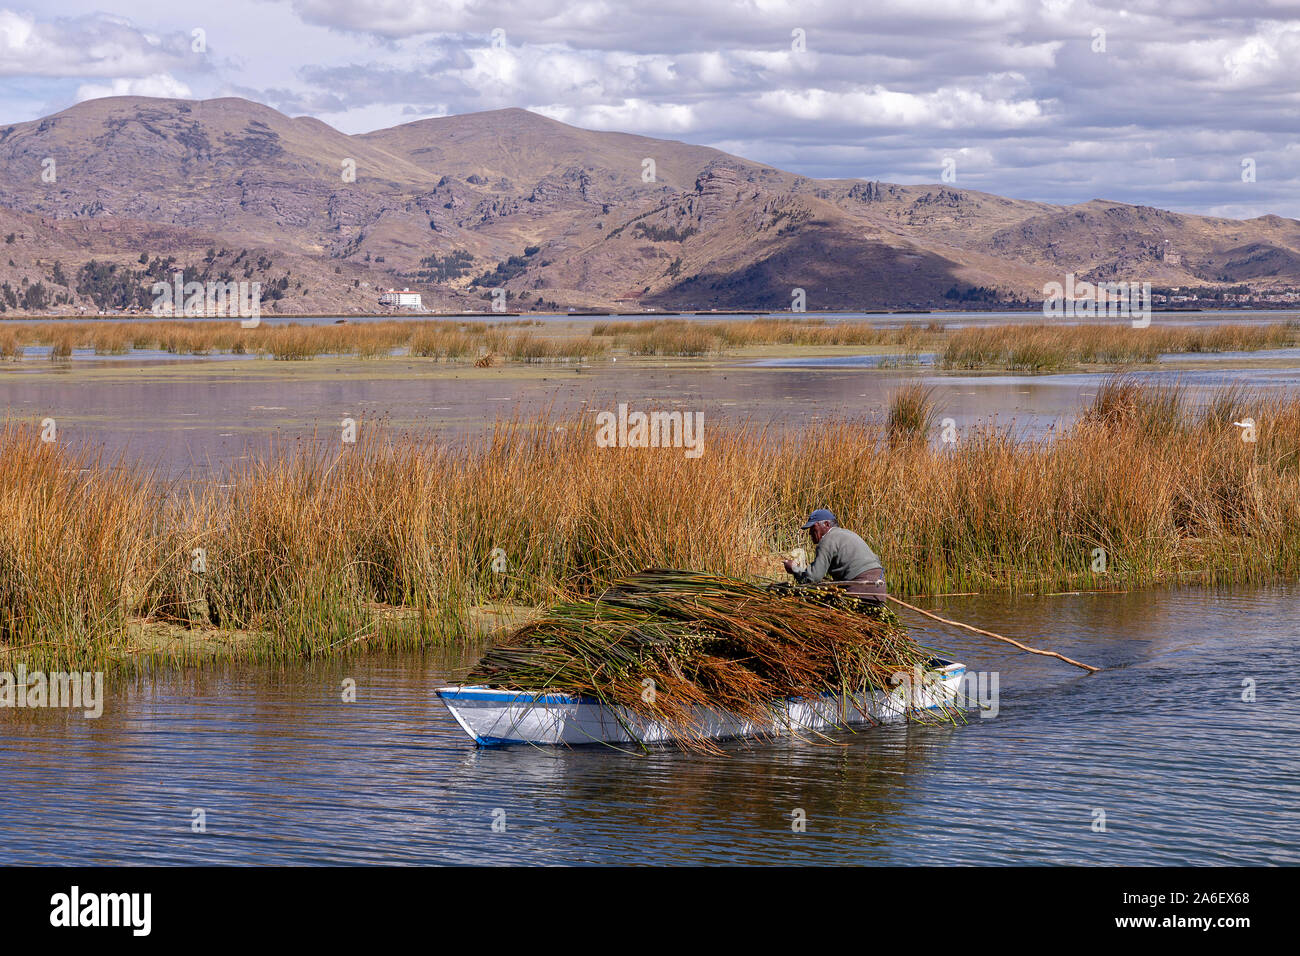 A man is gathering reed on Lake Titicaca near Puno in Peru. Stock Photo